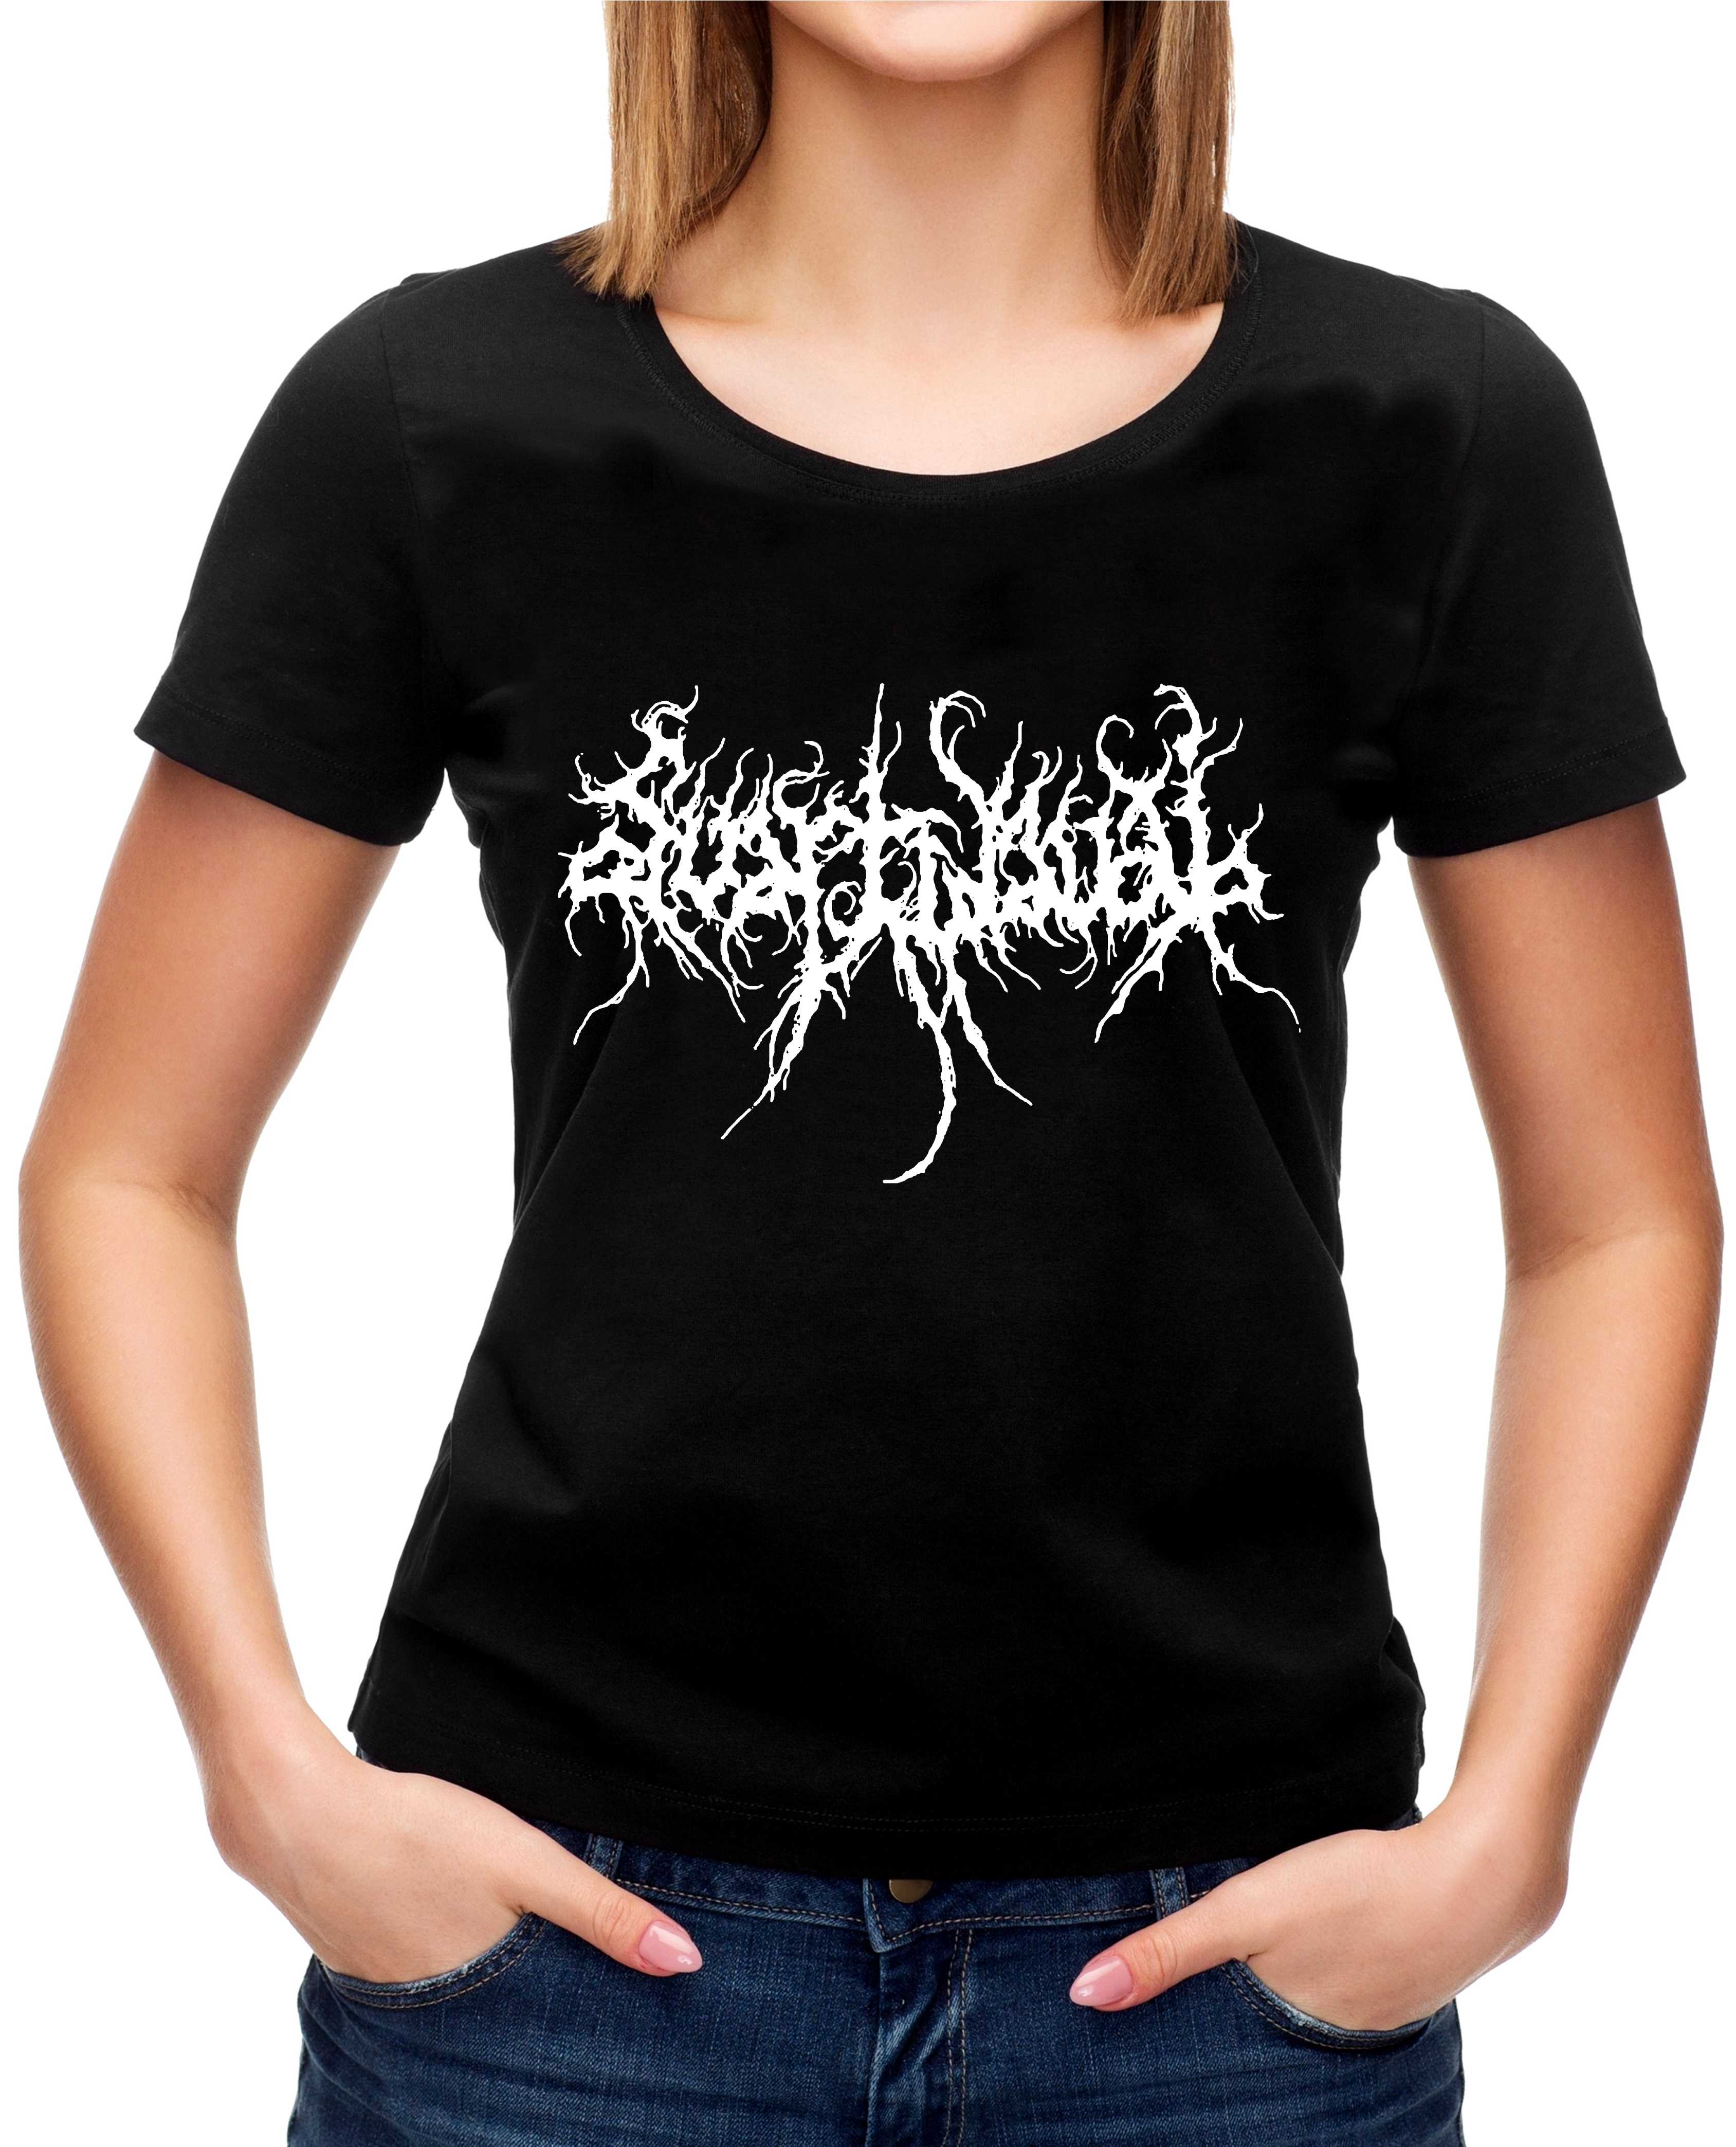 Svartidaudi Logo Girlie T-Shirt – Metal & Rock T-shirts and Accessories